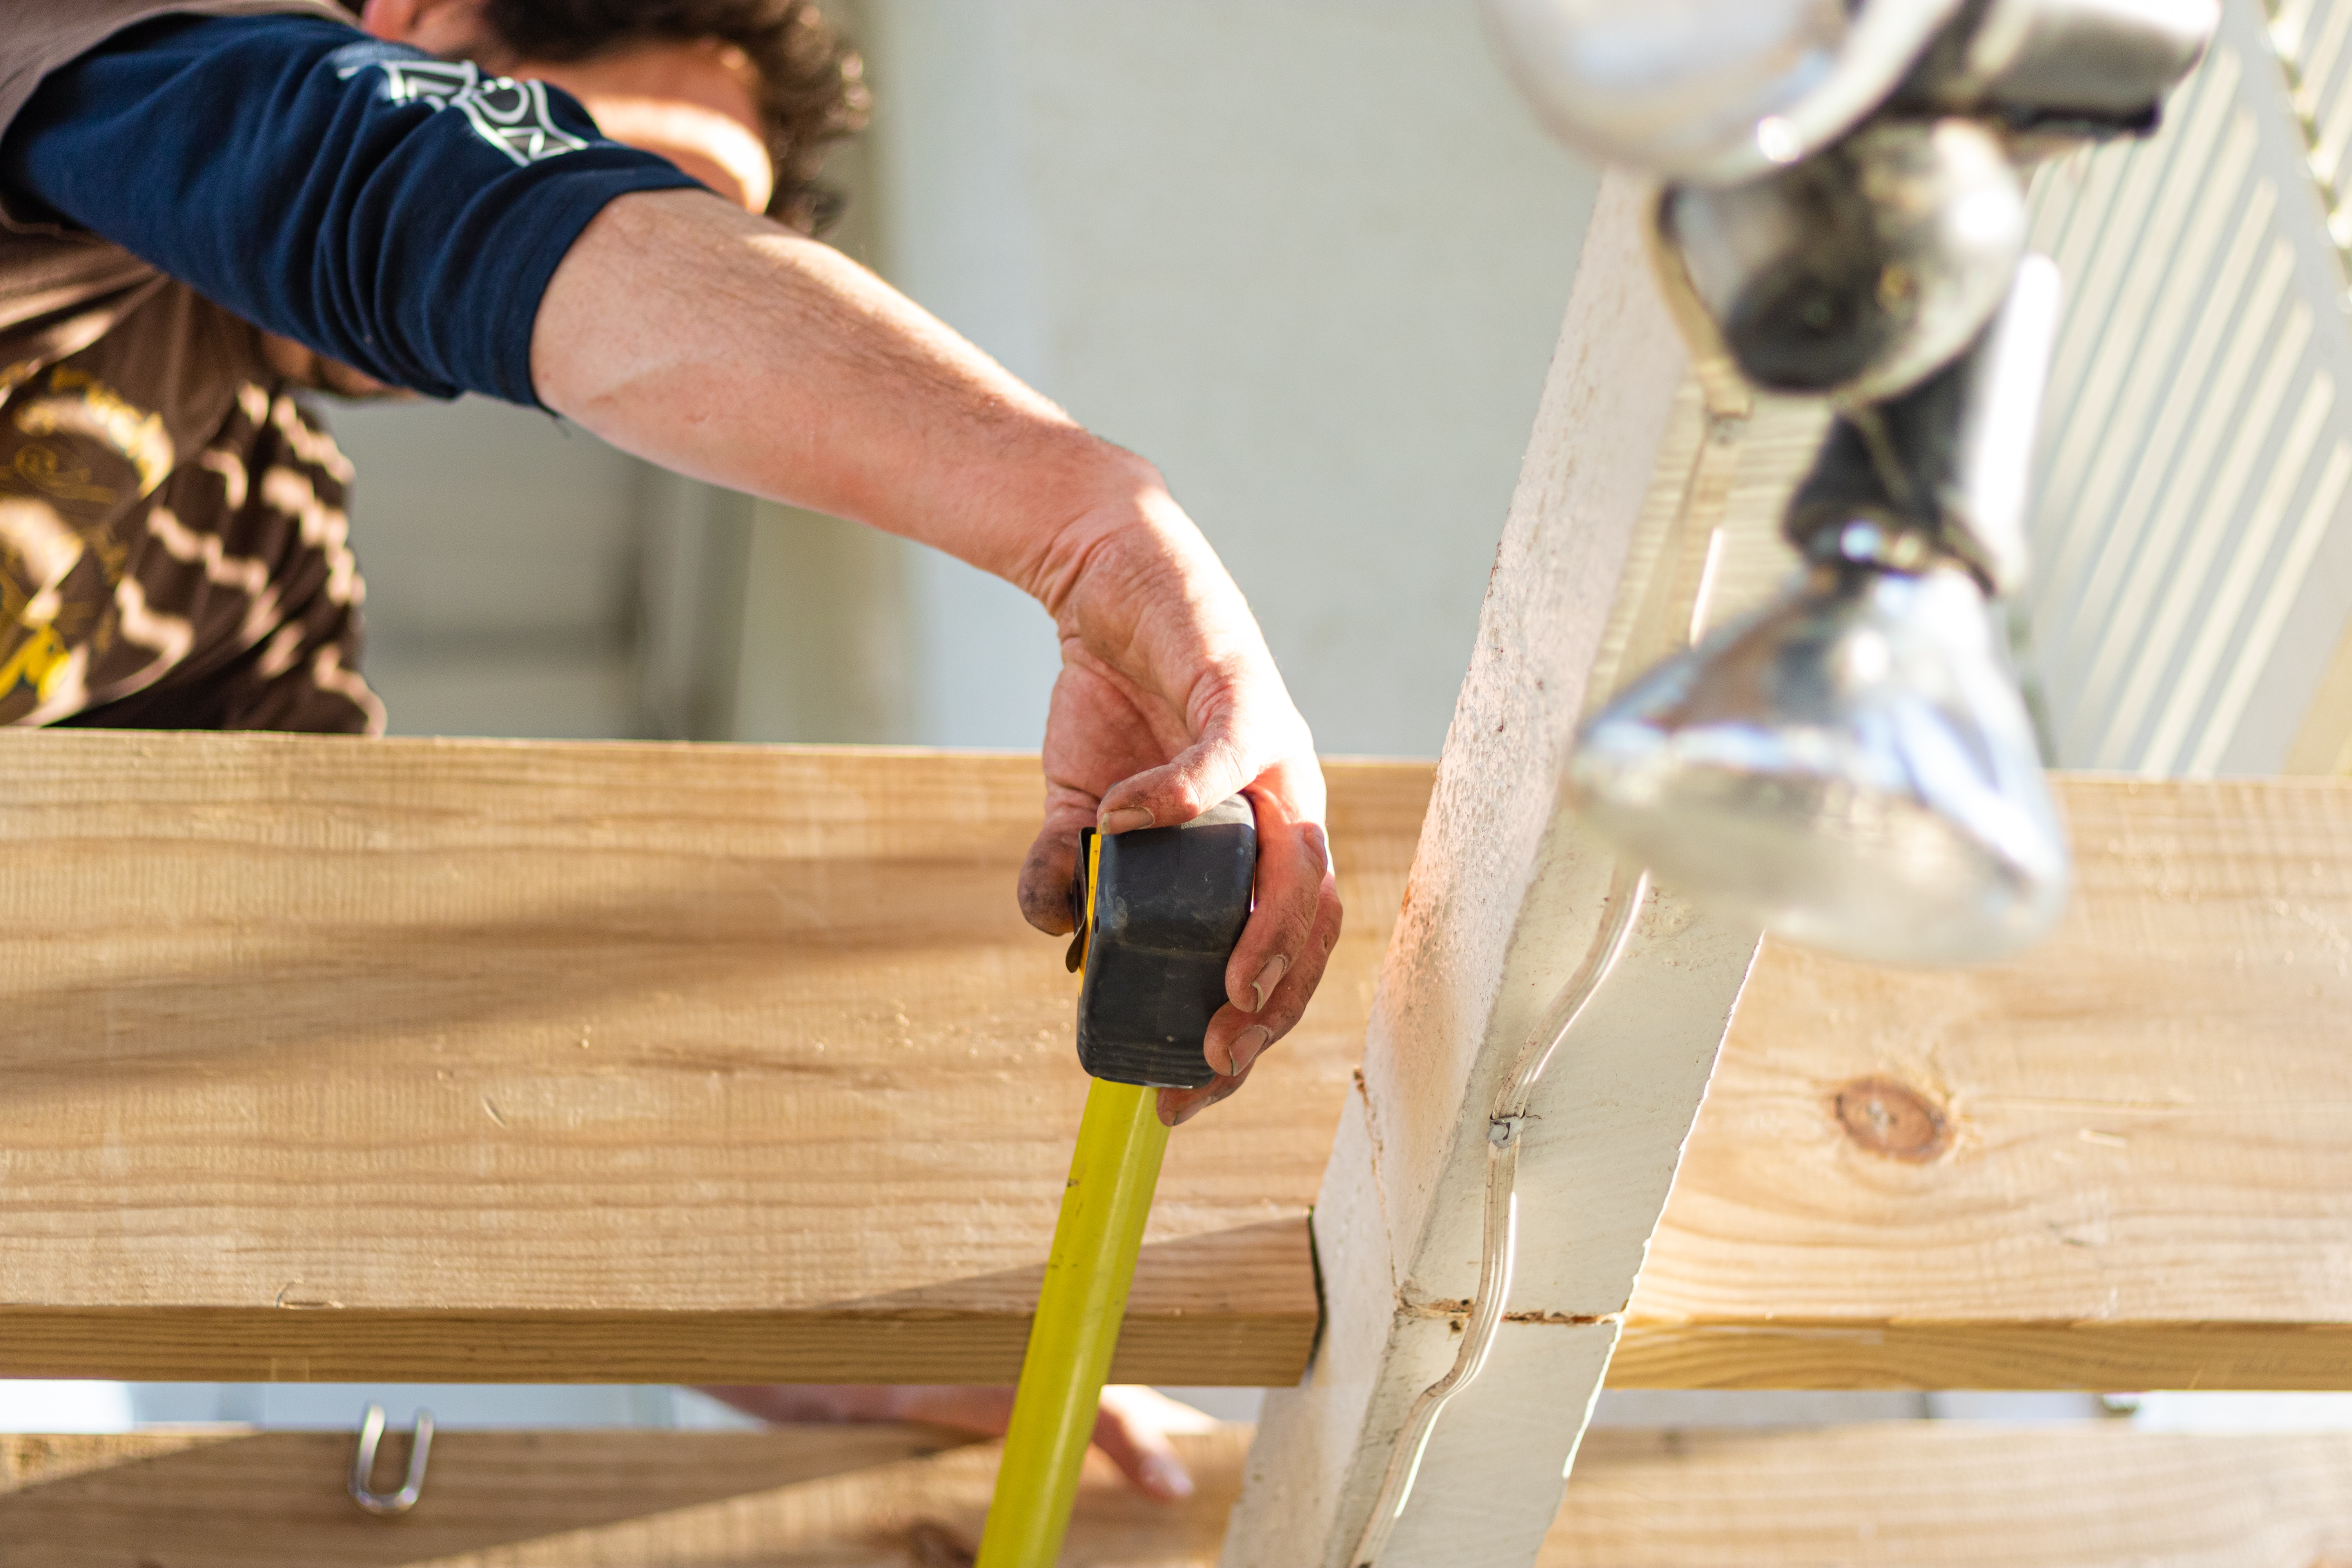 Become an apprentice carpenter